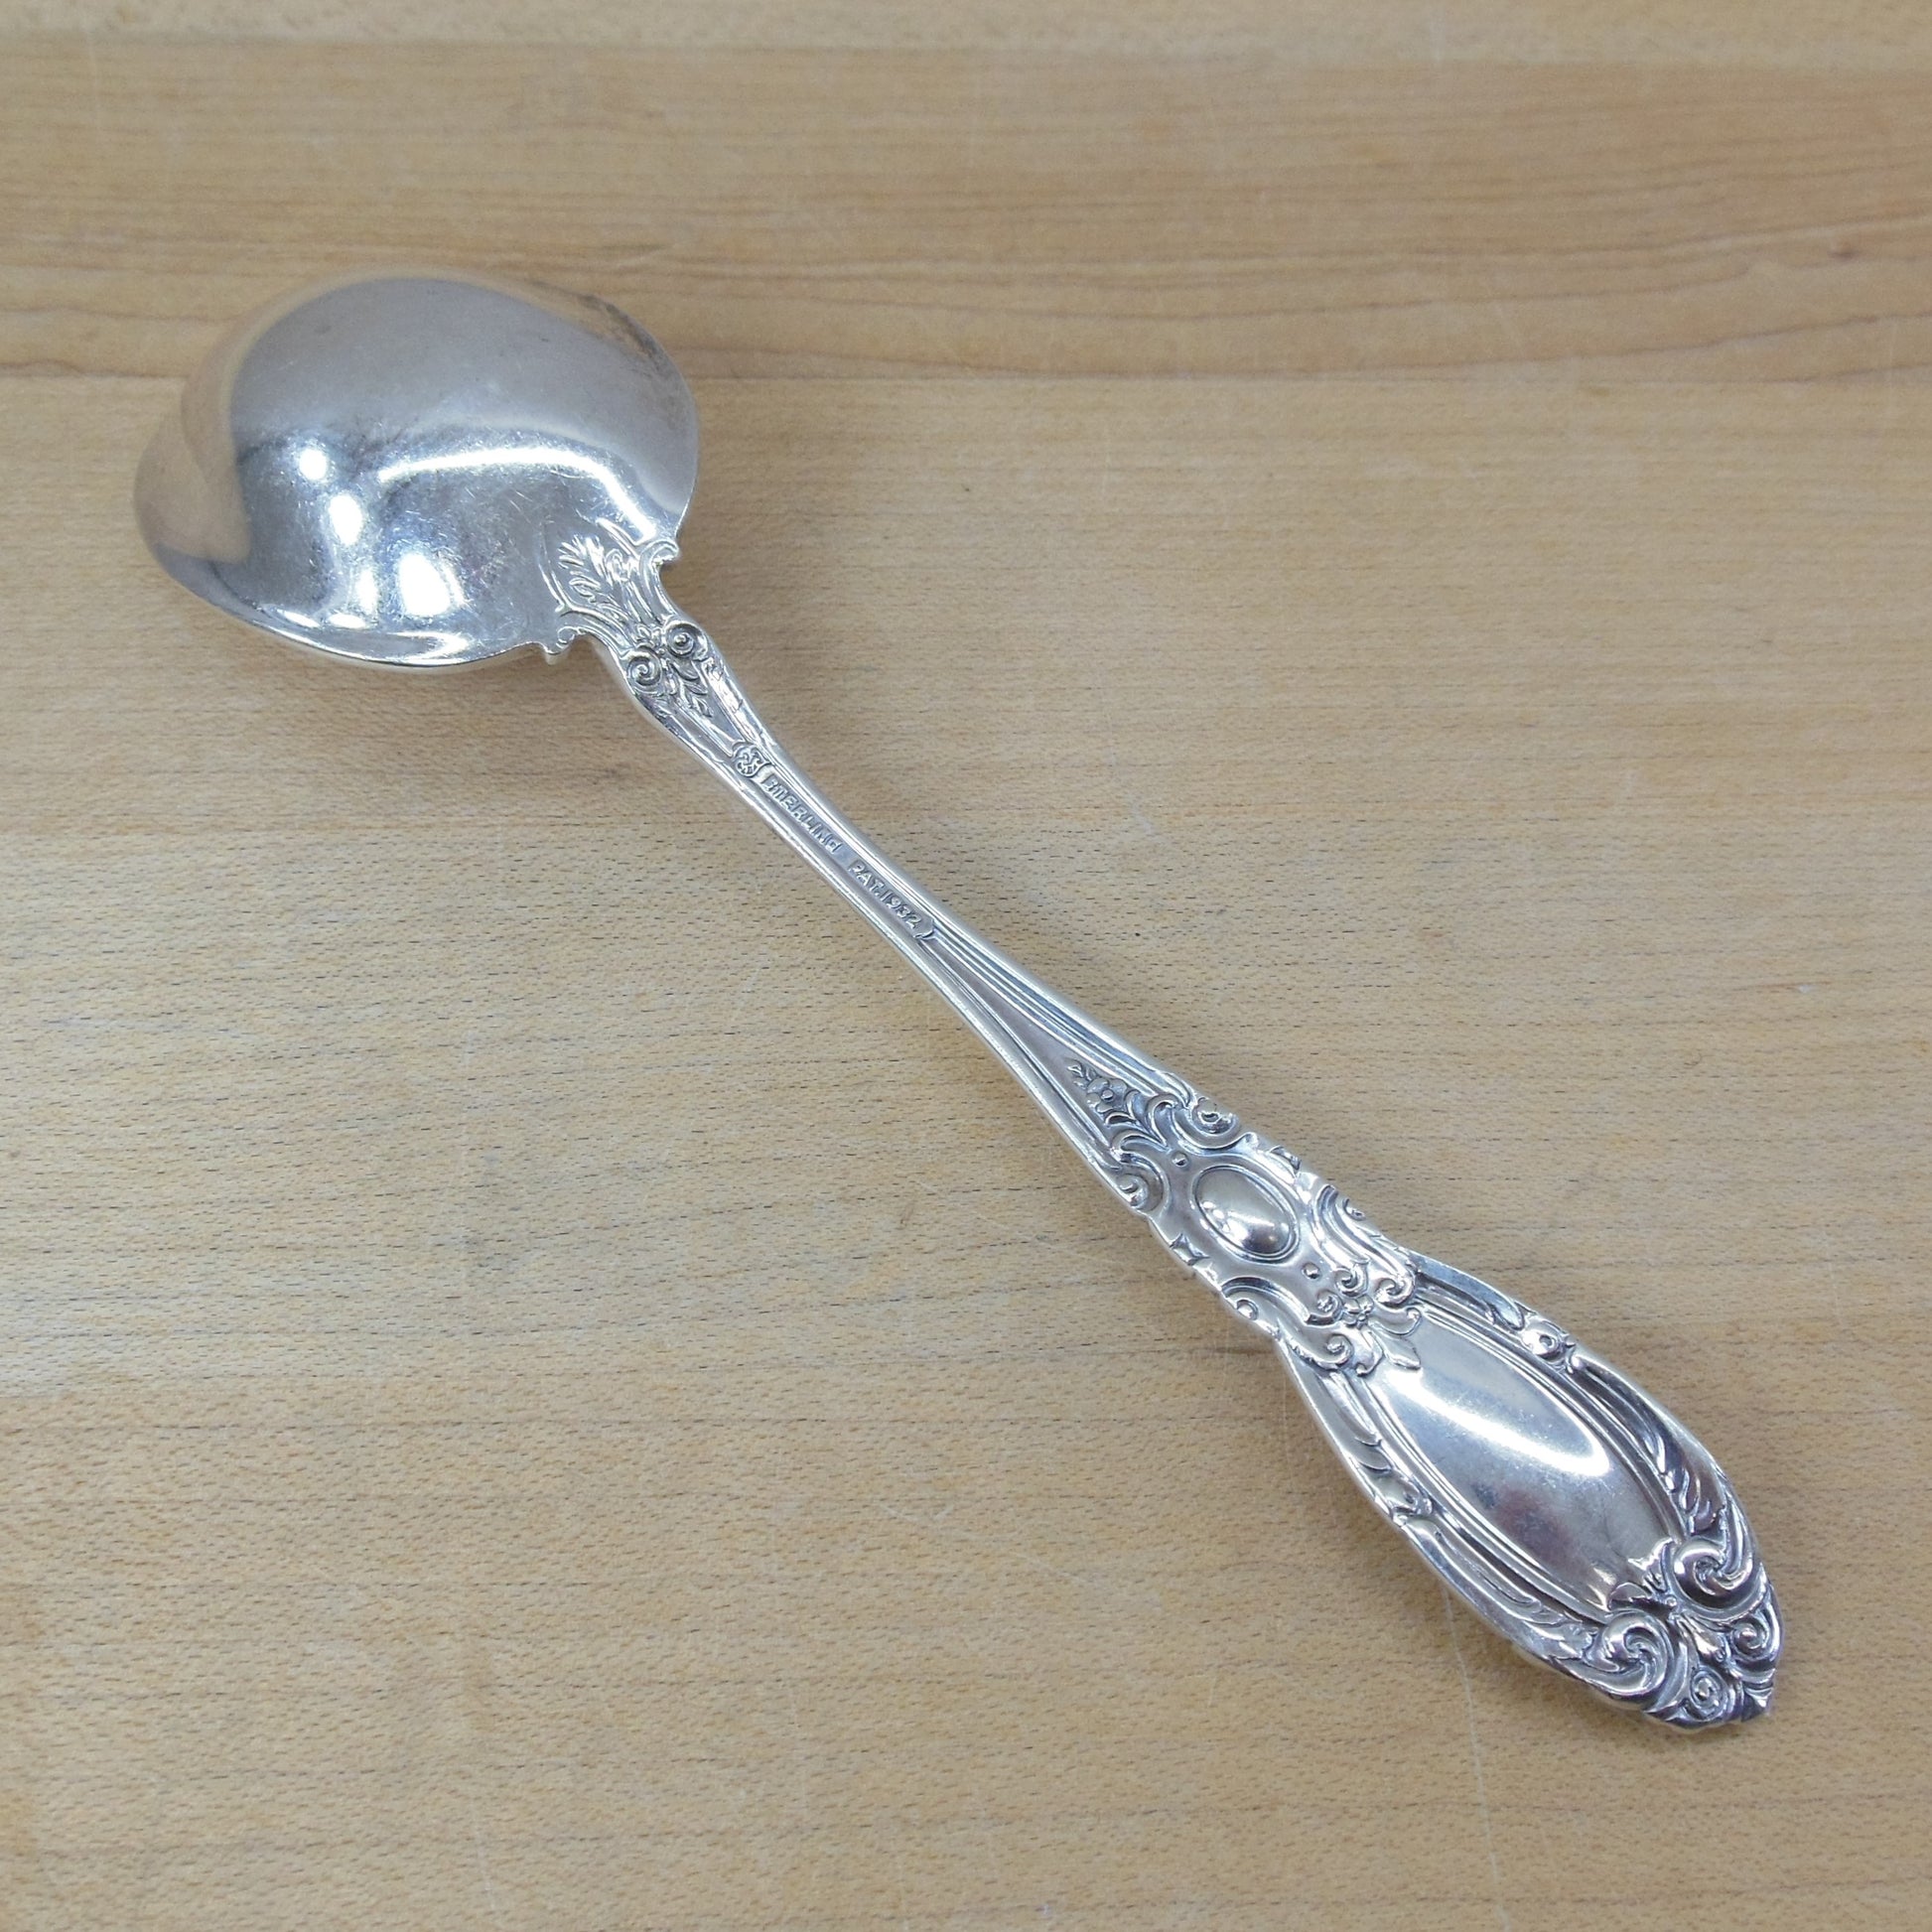 Towle King Richard Sterling Silver Flatware - Sugar Spoon used